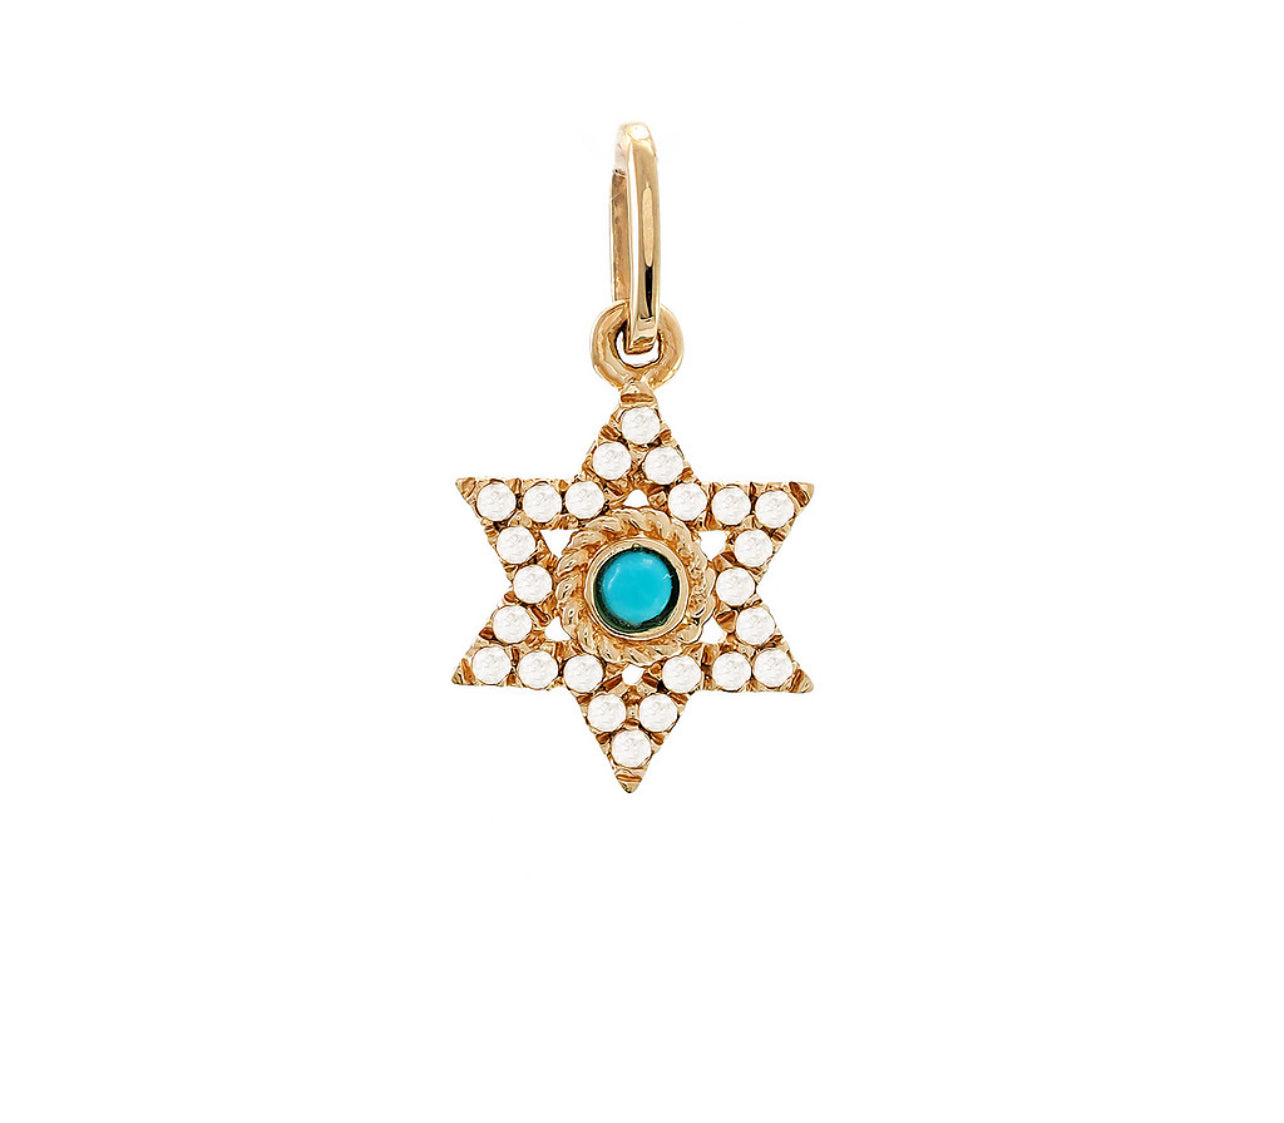 Turquoise Jewish Star Charm